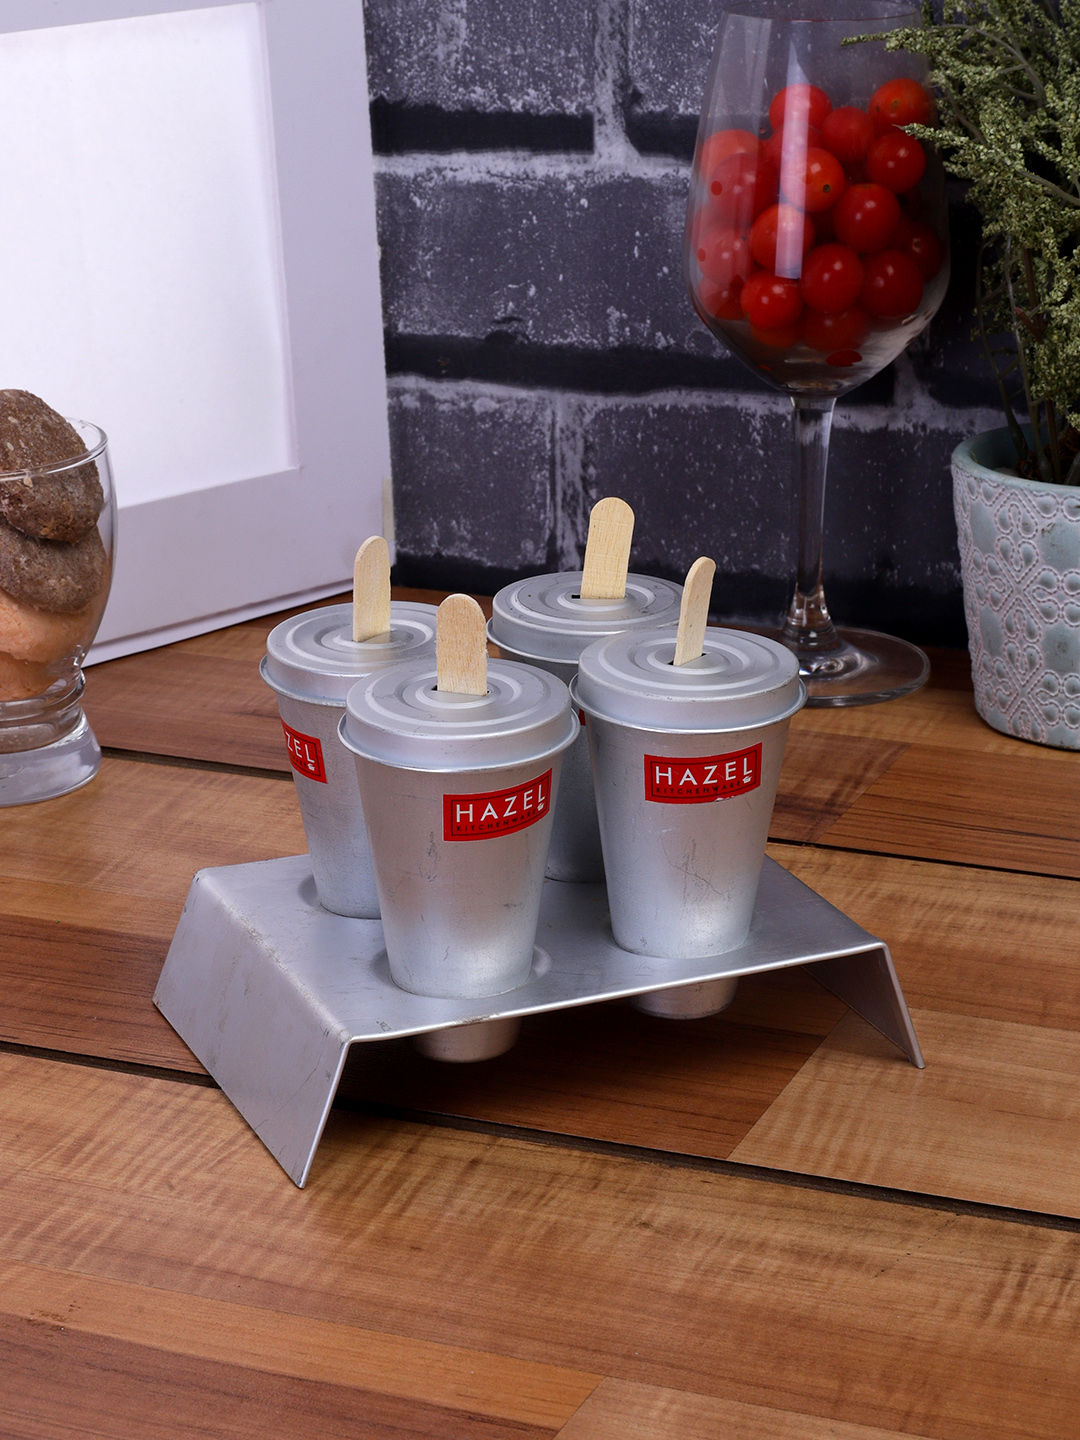 HAZEL Aluminium Kulfi Mould for Homemade Kulfi Making | Kulfi Maker for Homemade Popsicle, Ice Cream